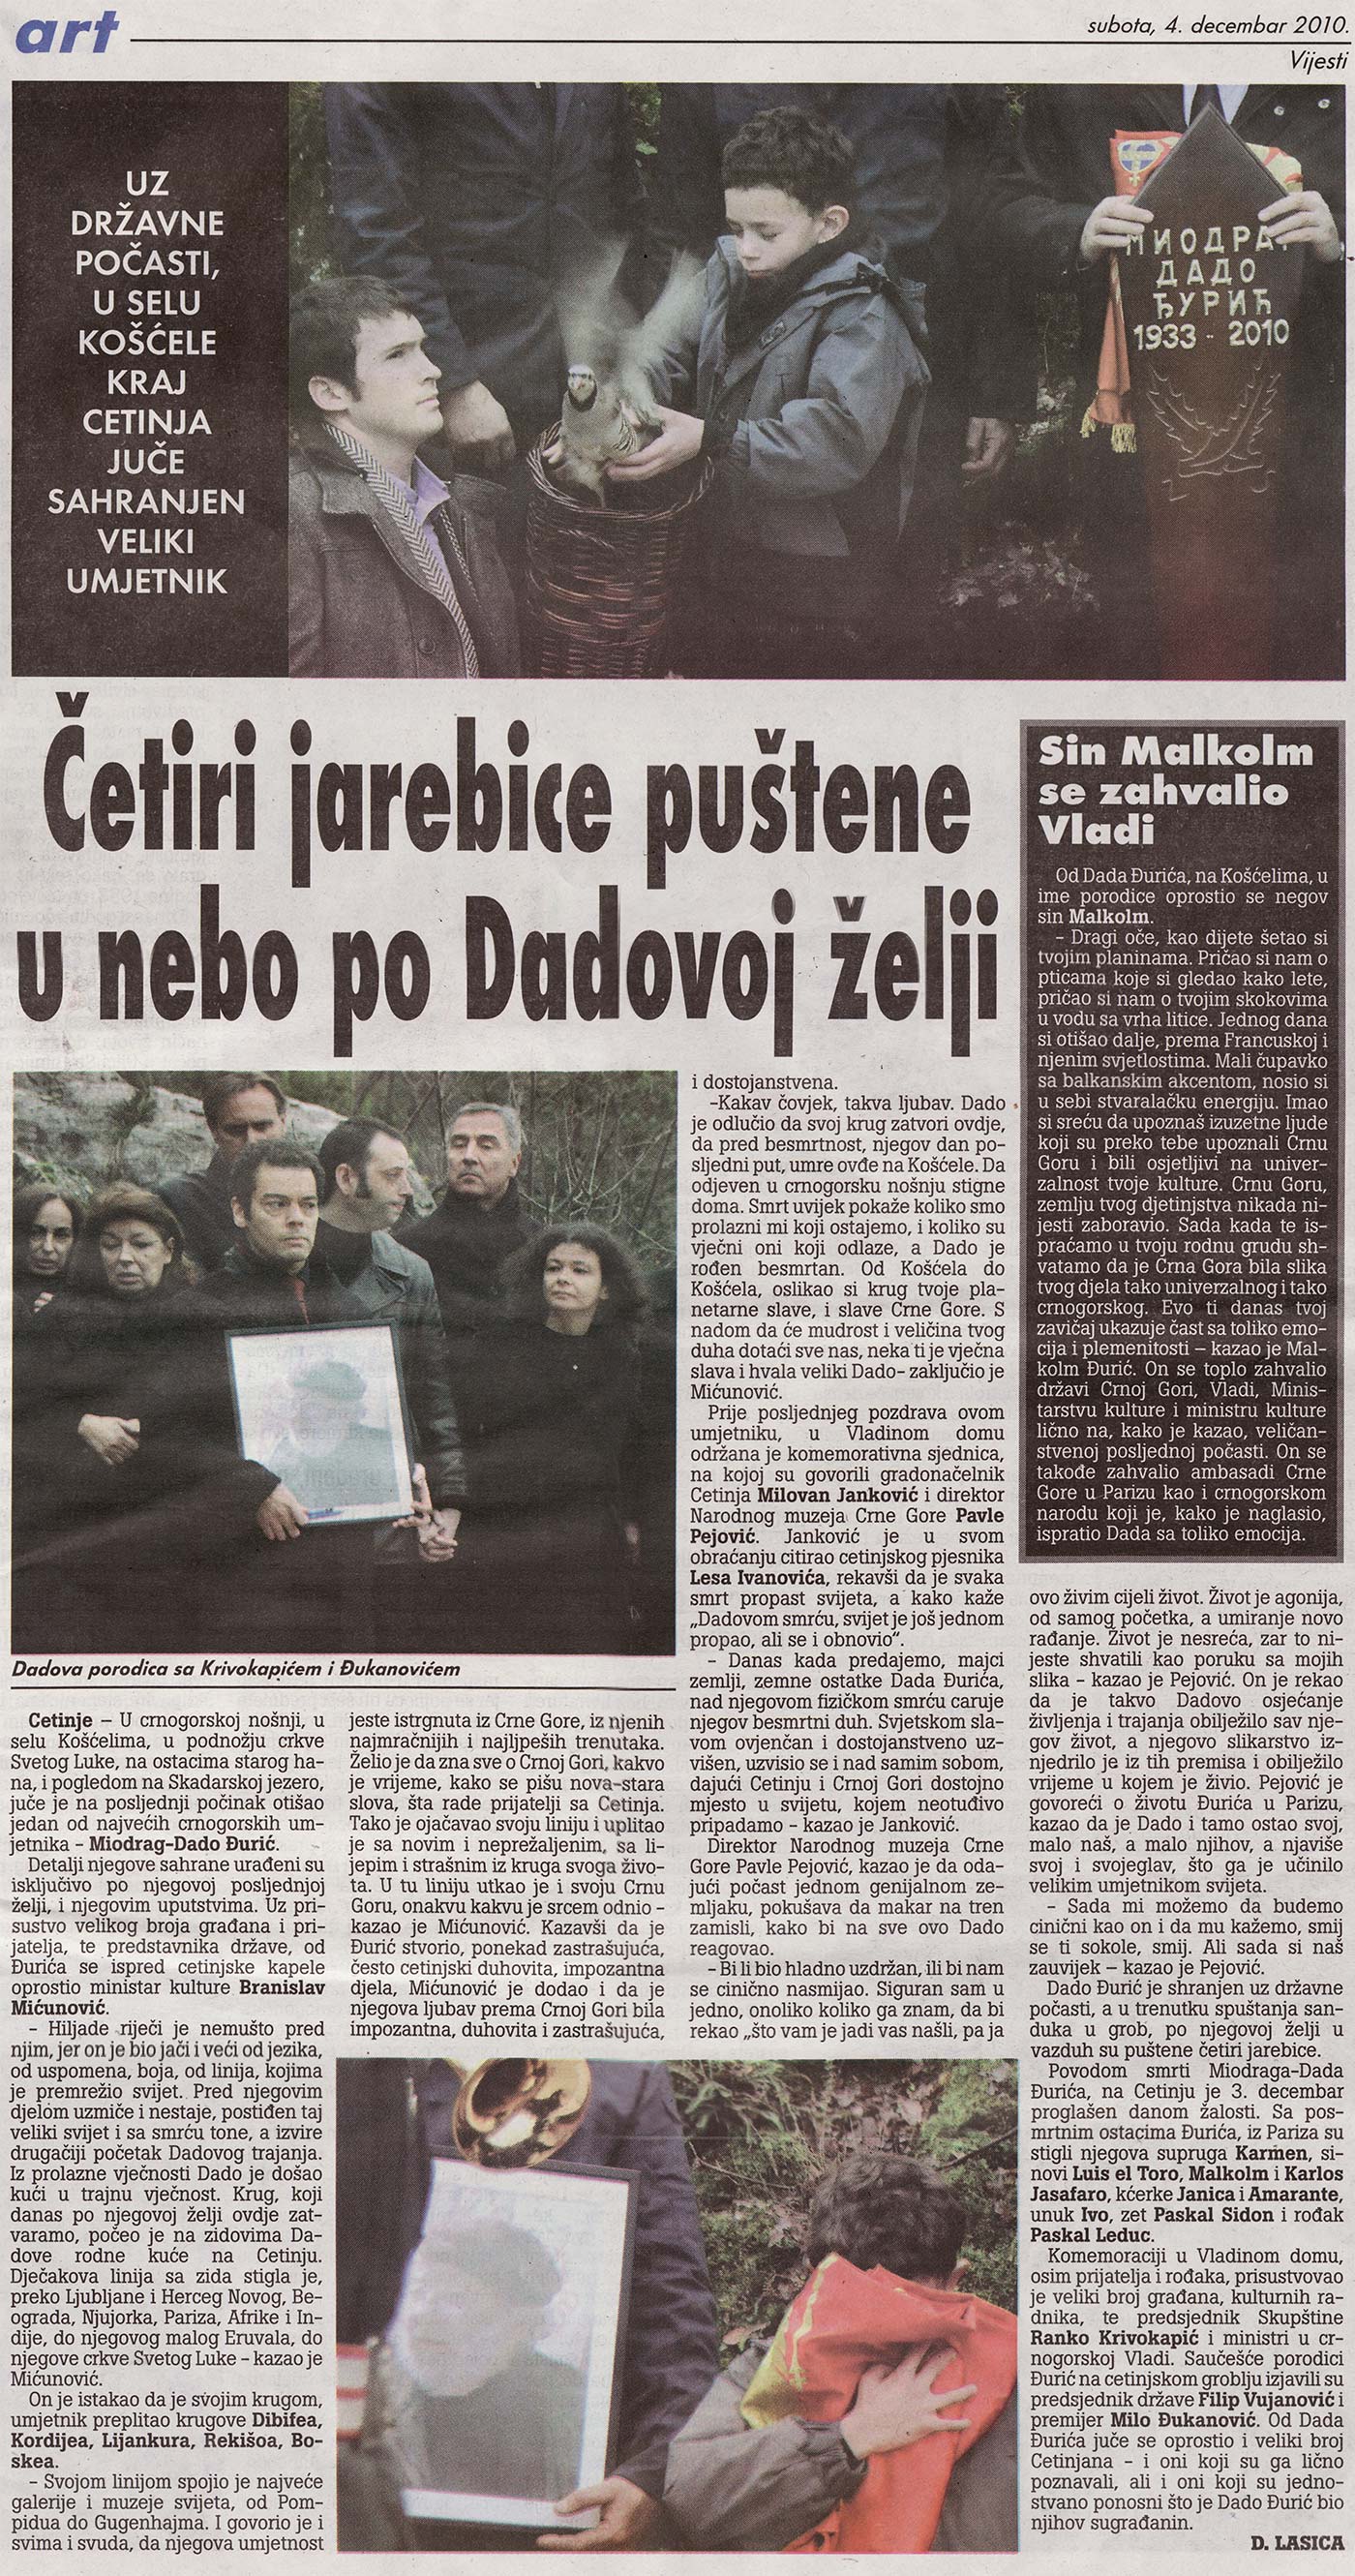 The newspaper Vijesti, 4th of December edition